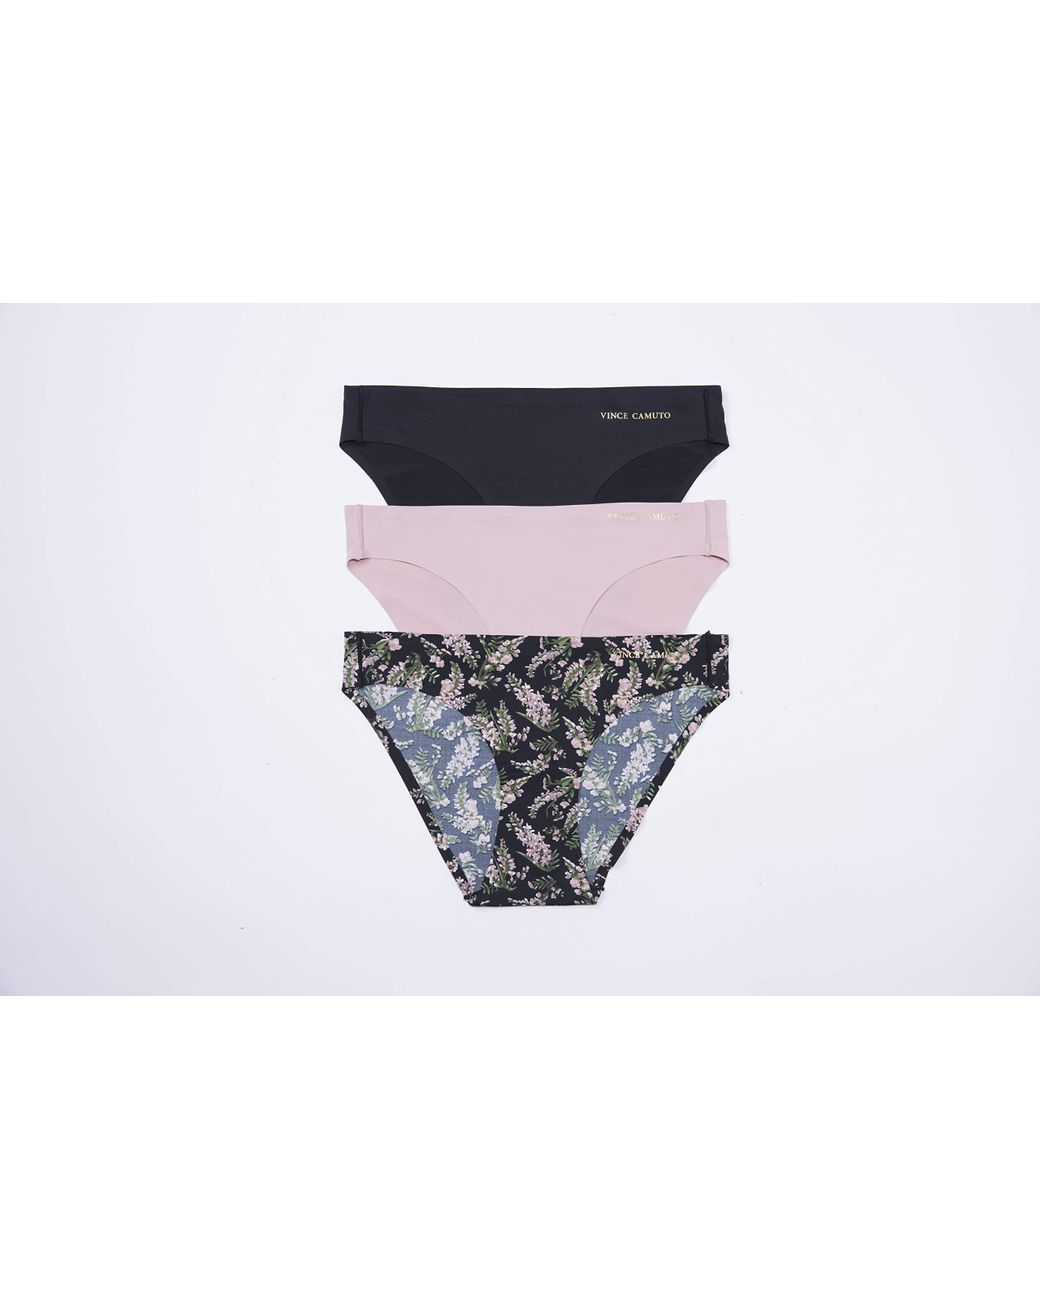 VINCE CAMUTO PINK Smooth Seamless Bikini Waist Panties Size  NWT MSRP $36 